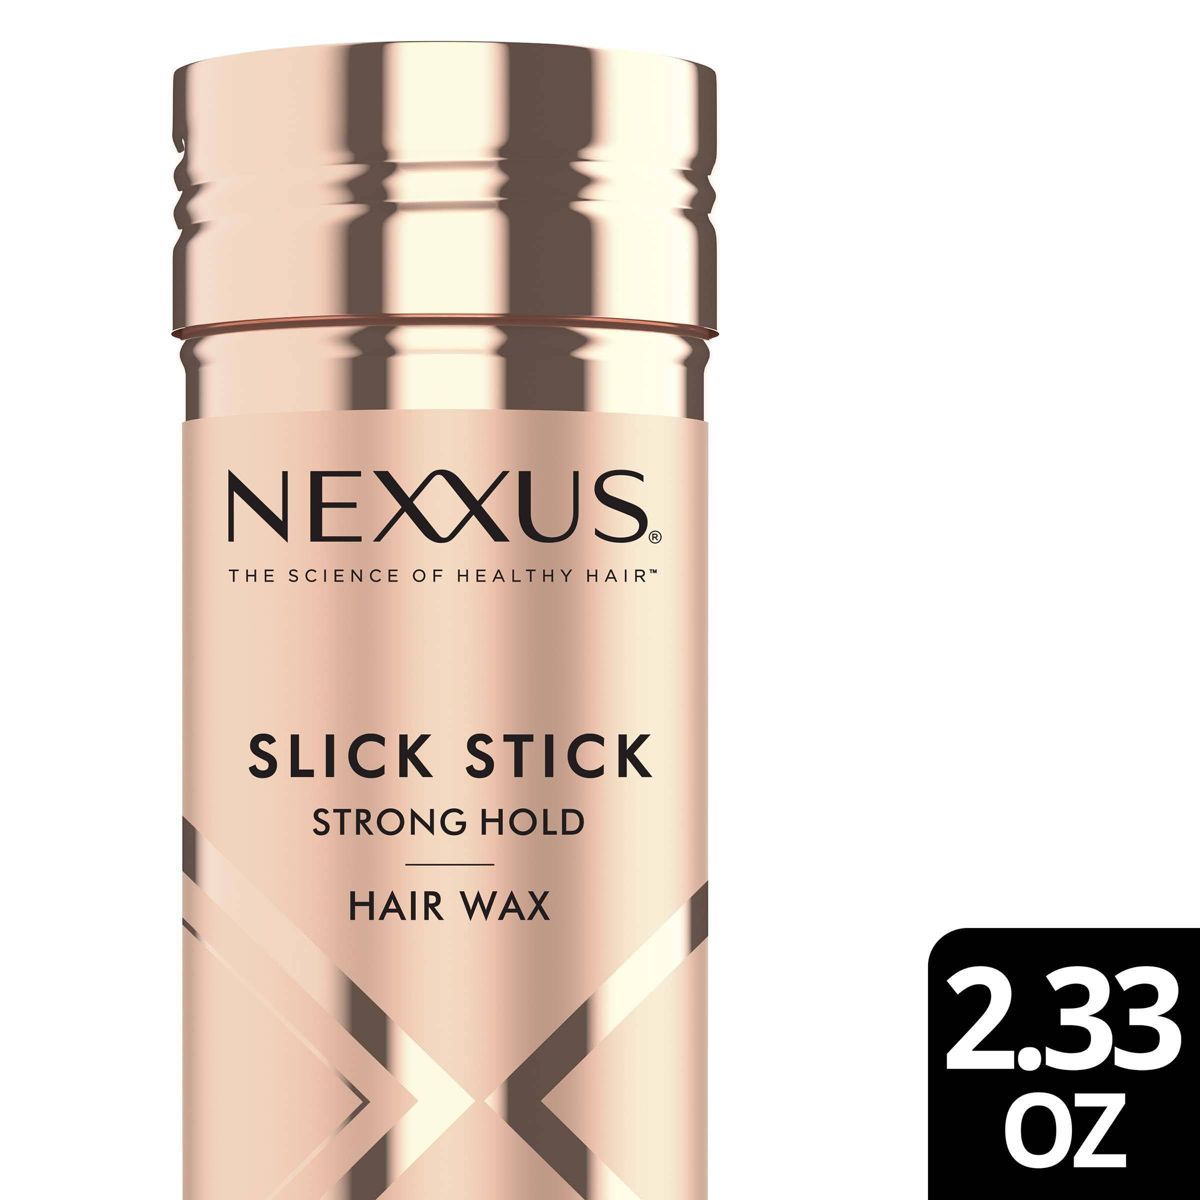 Nexxus Slick Stick Strong Hold Hair Wax - 2.57oz | Target